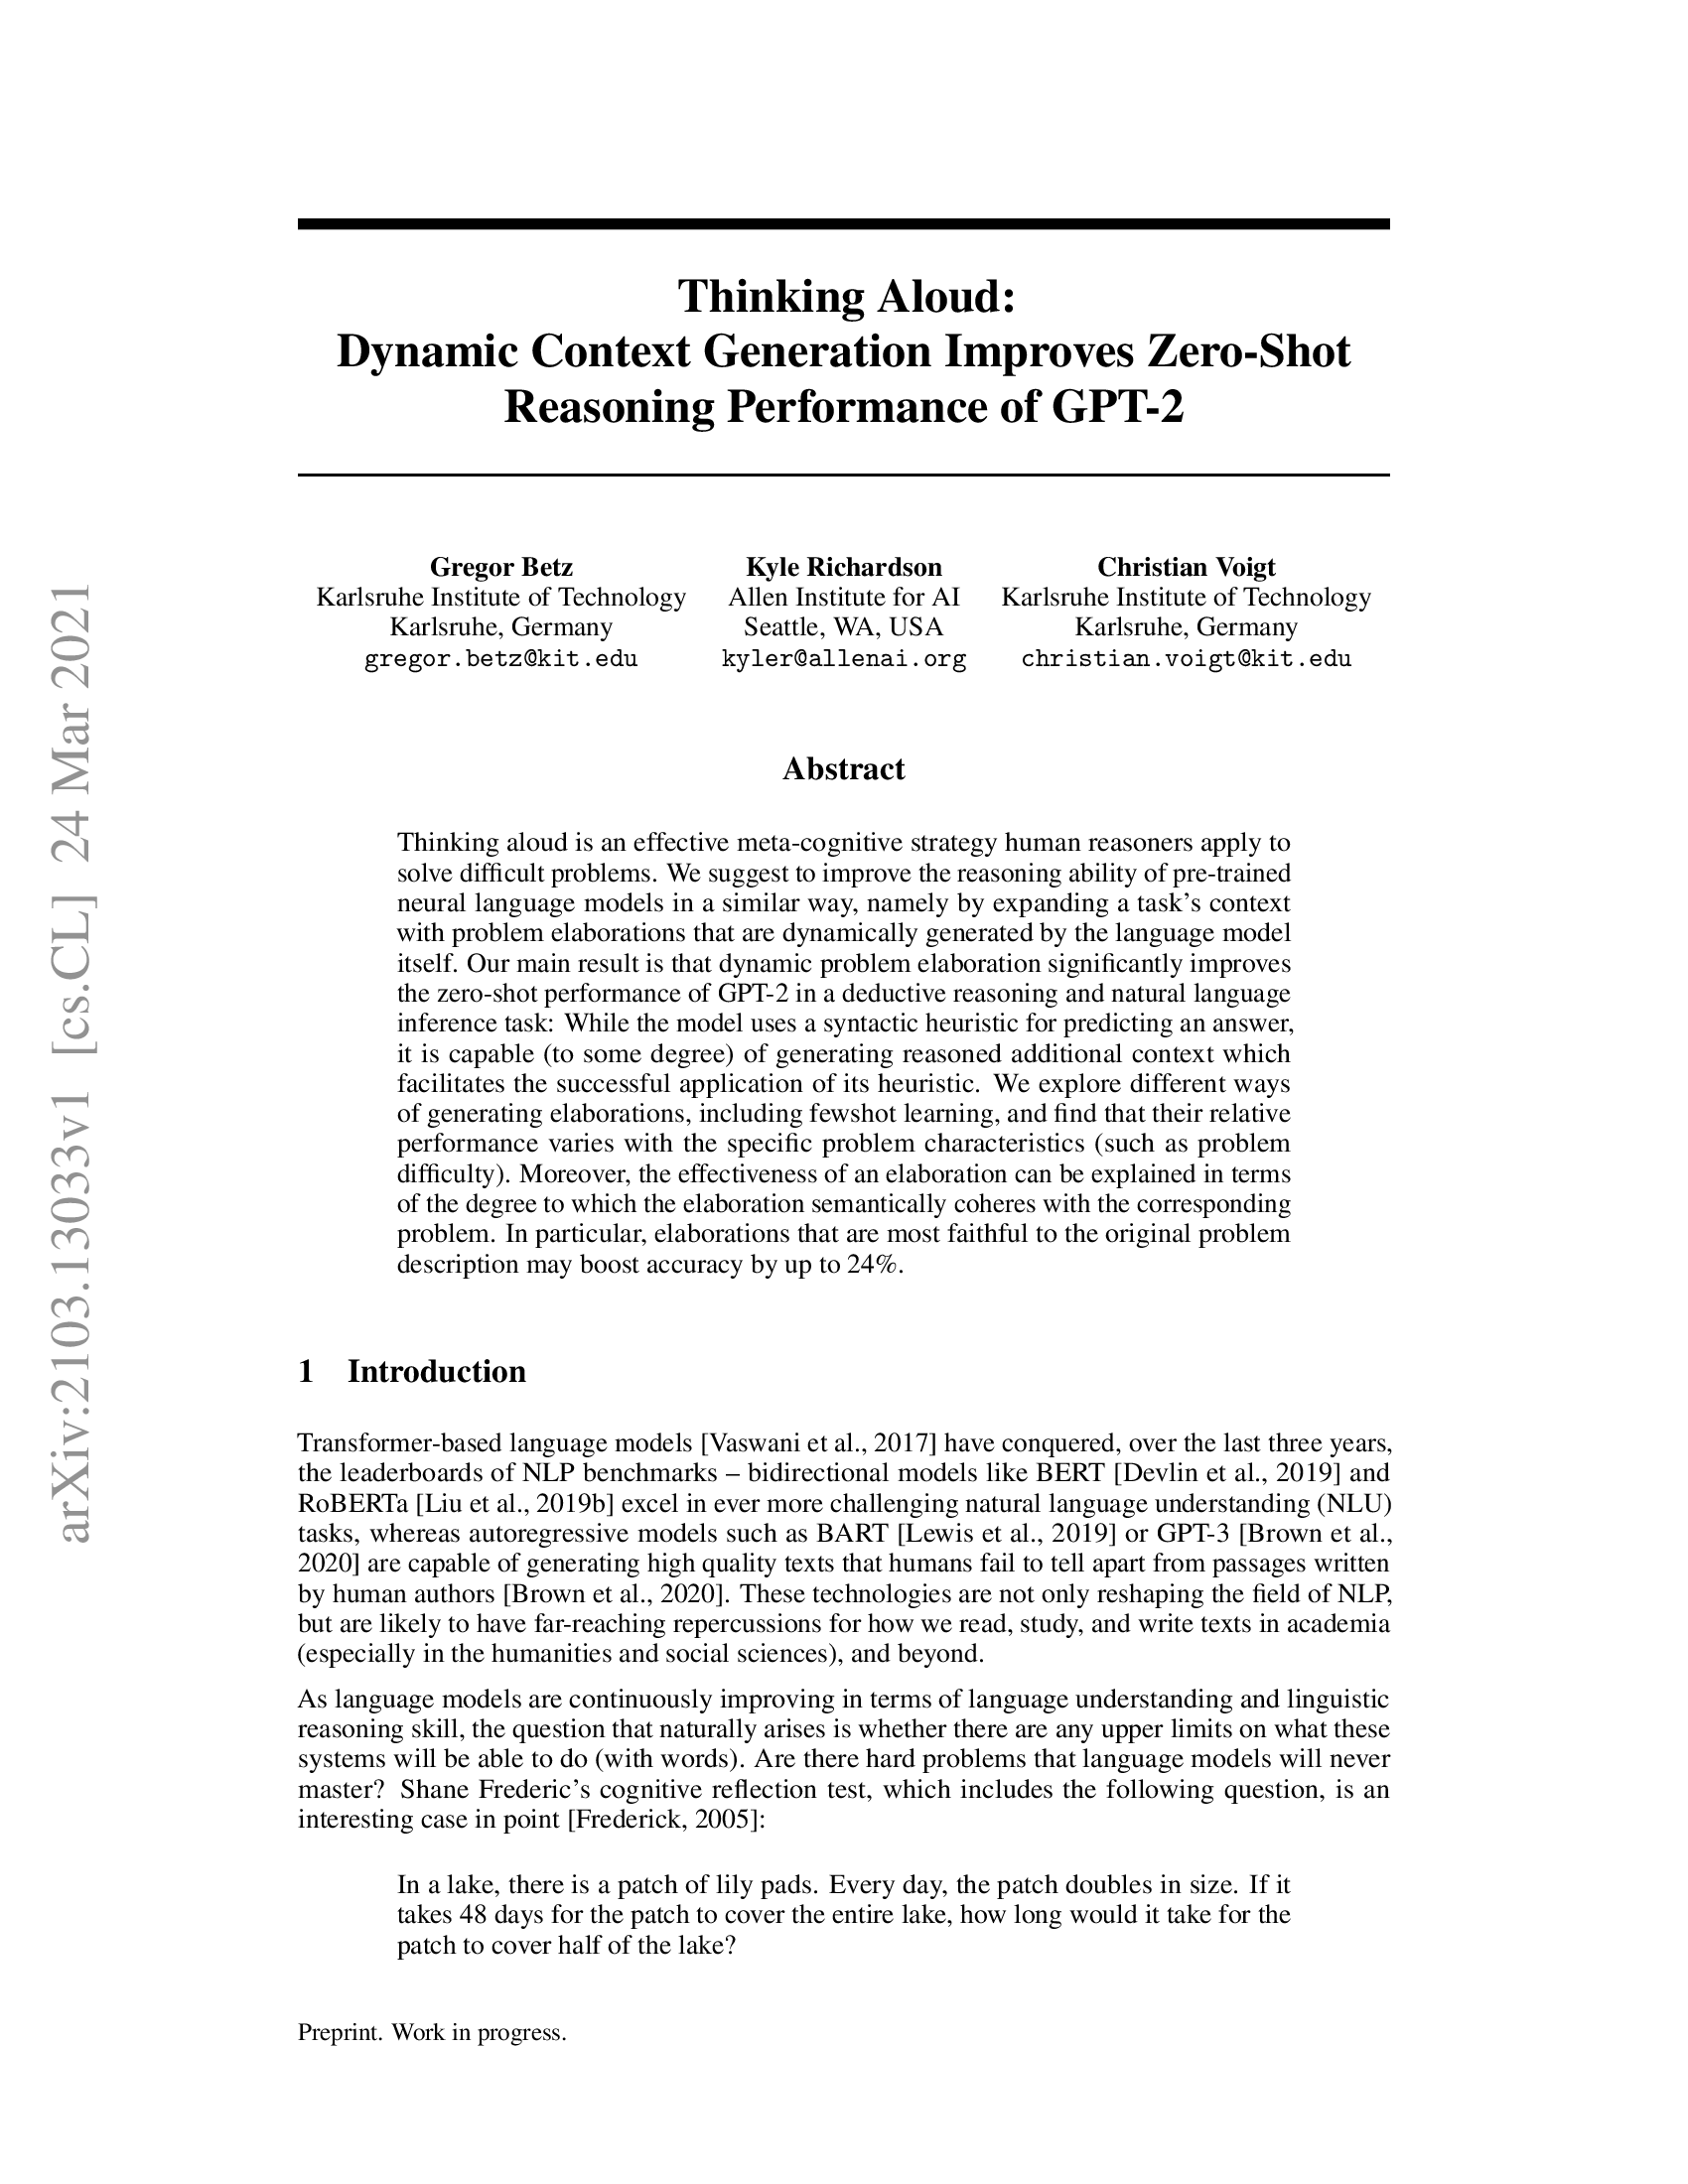 Thinking Aloud: Dynamic Context Generation Improves Zero-Shot Reasoning Performance of GPT-2